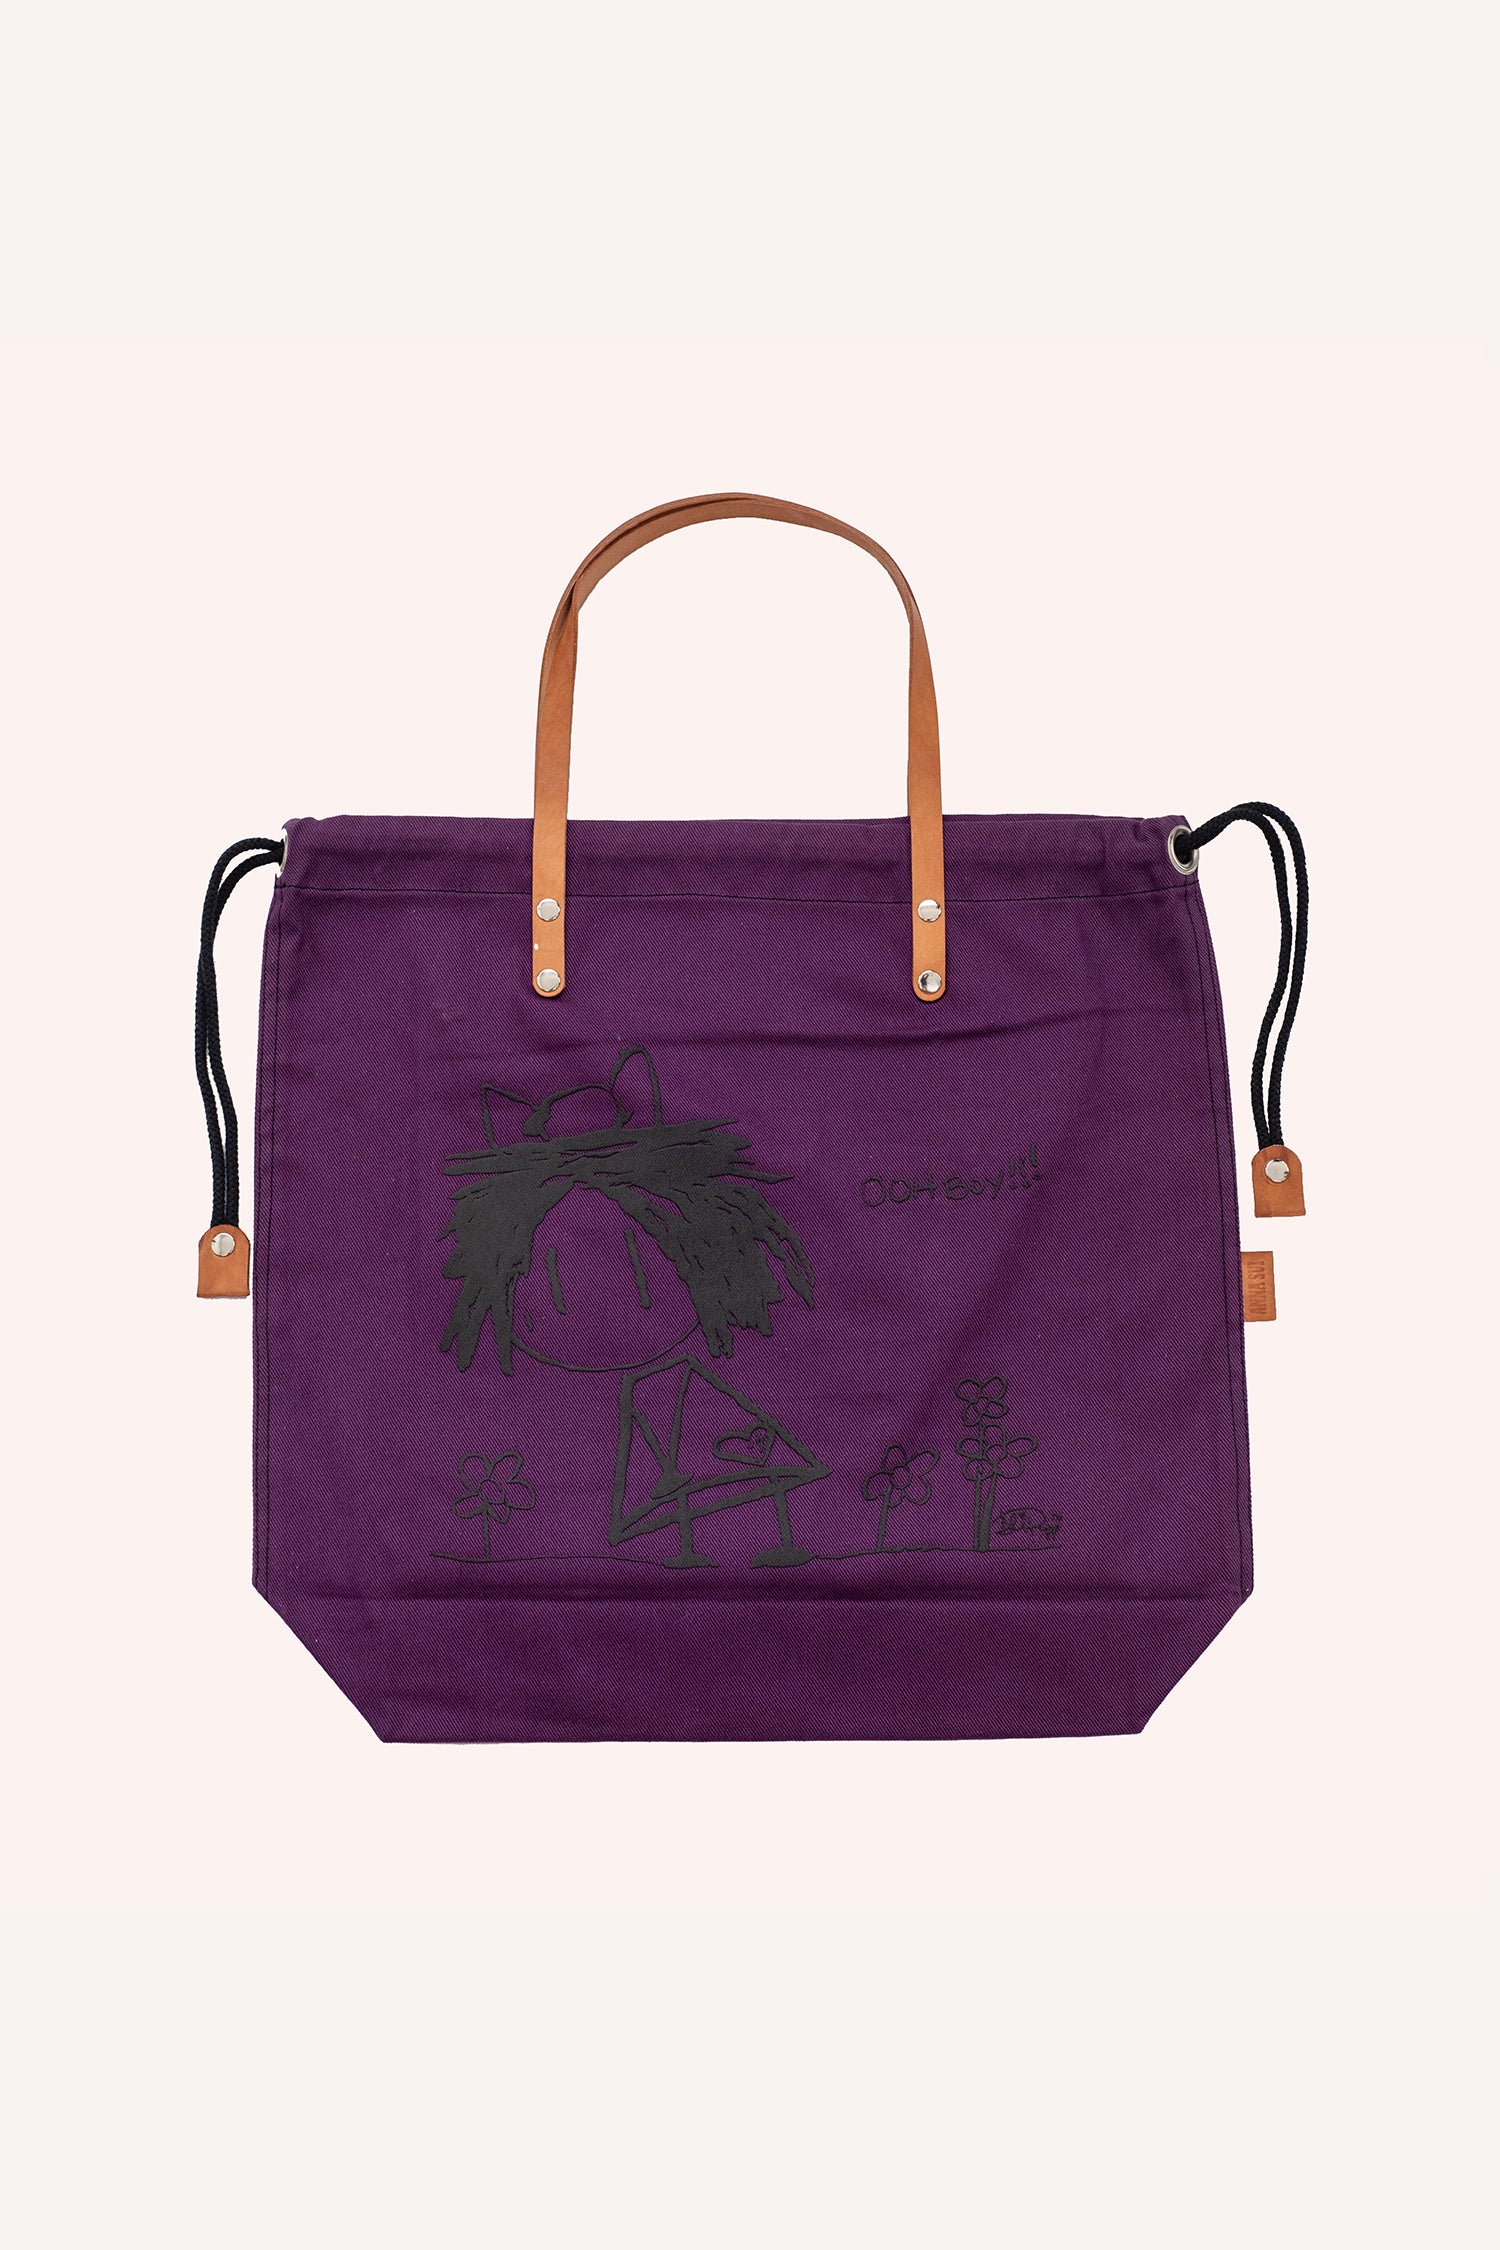 Tote bag, purple squared shape, beige handles, black laces to closed, Ali Rapp artwork grey Happy girl